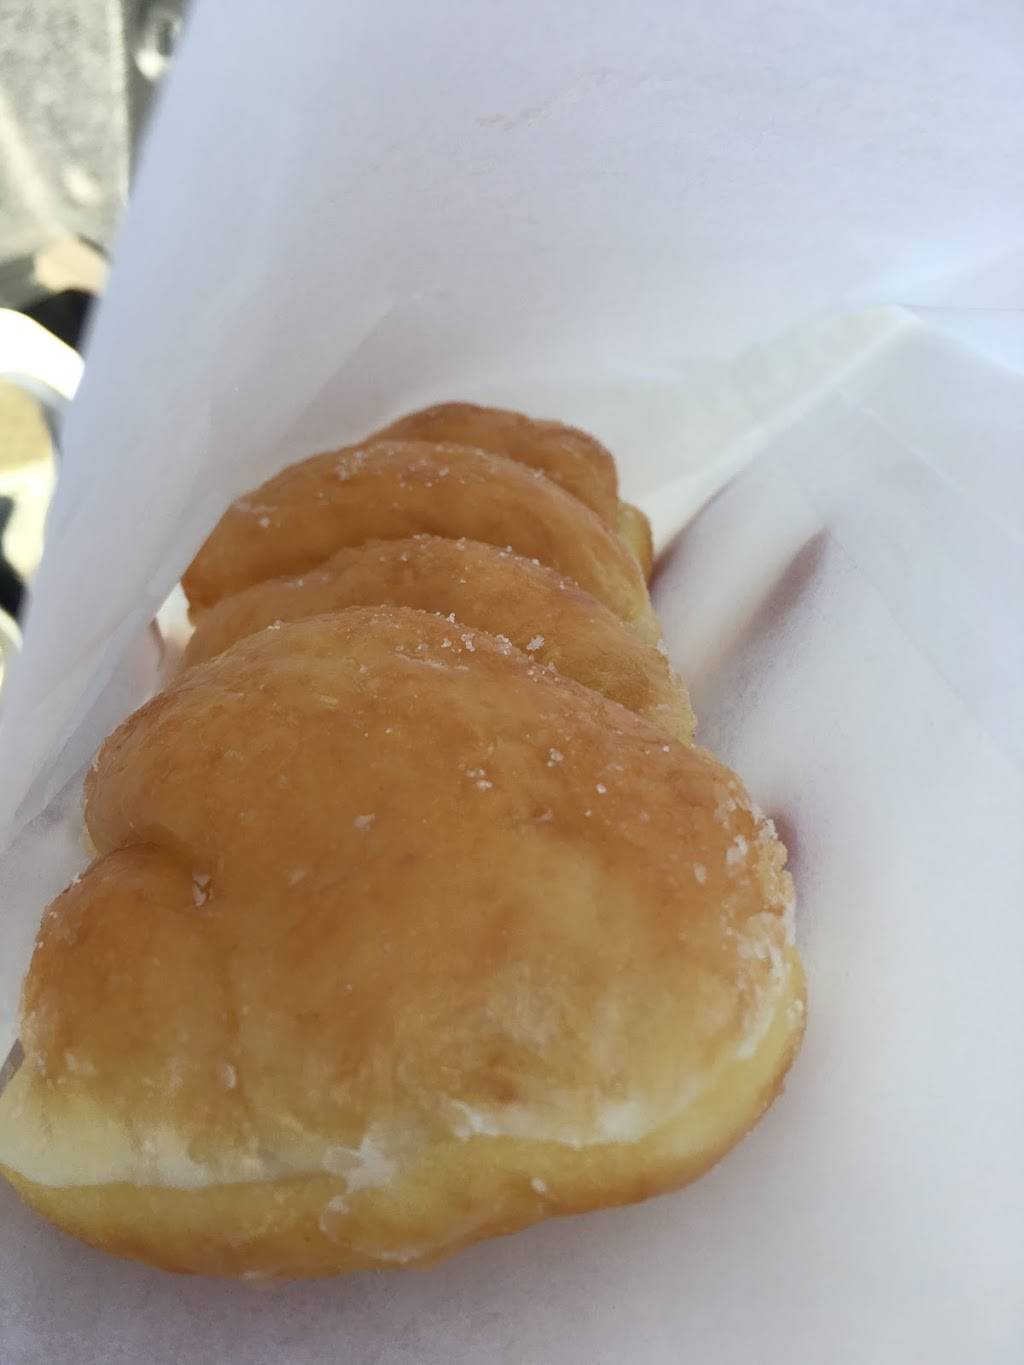 KDs Donuts | 4676 Market St, San Diego, CA 92102 | Phone: (619) 262-8683